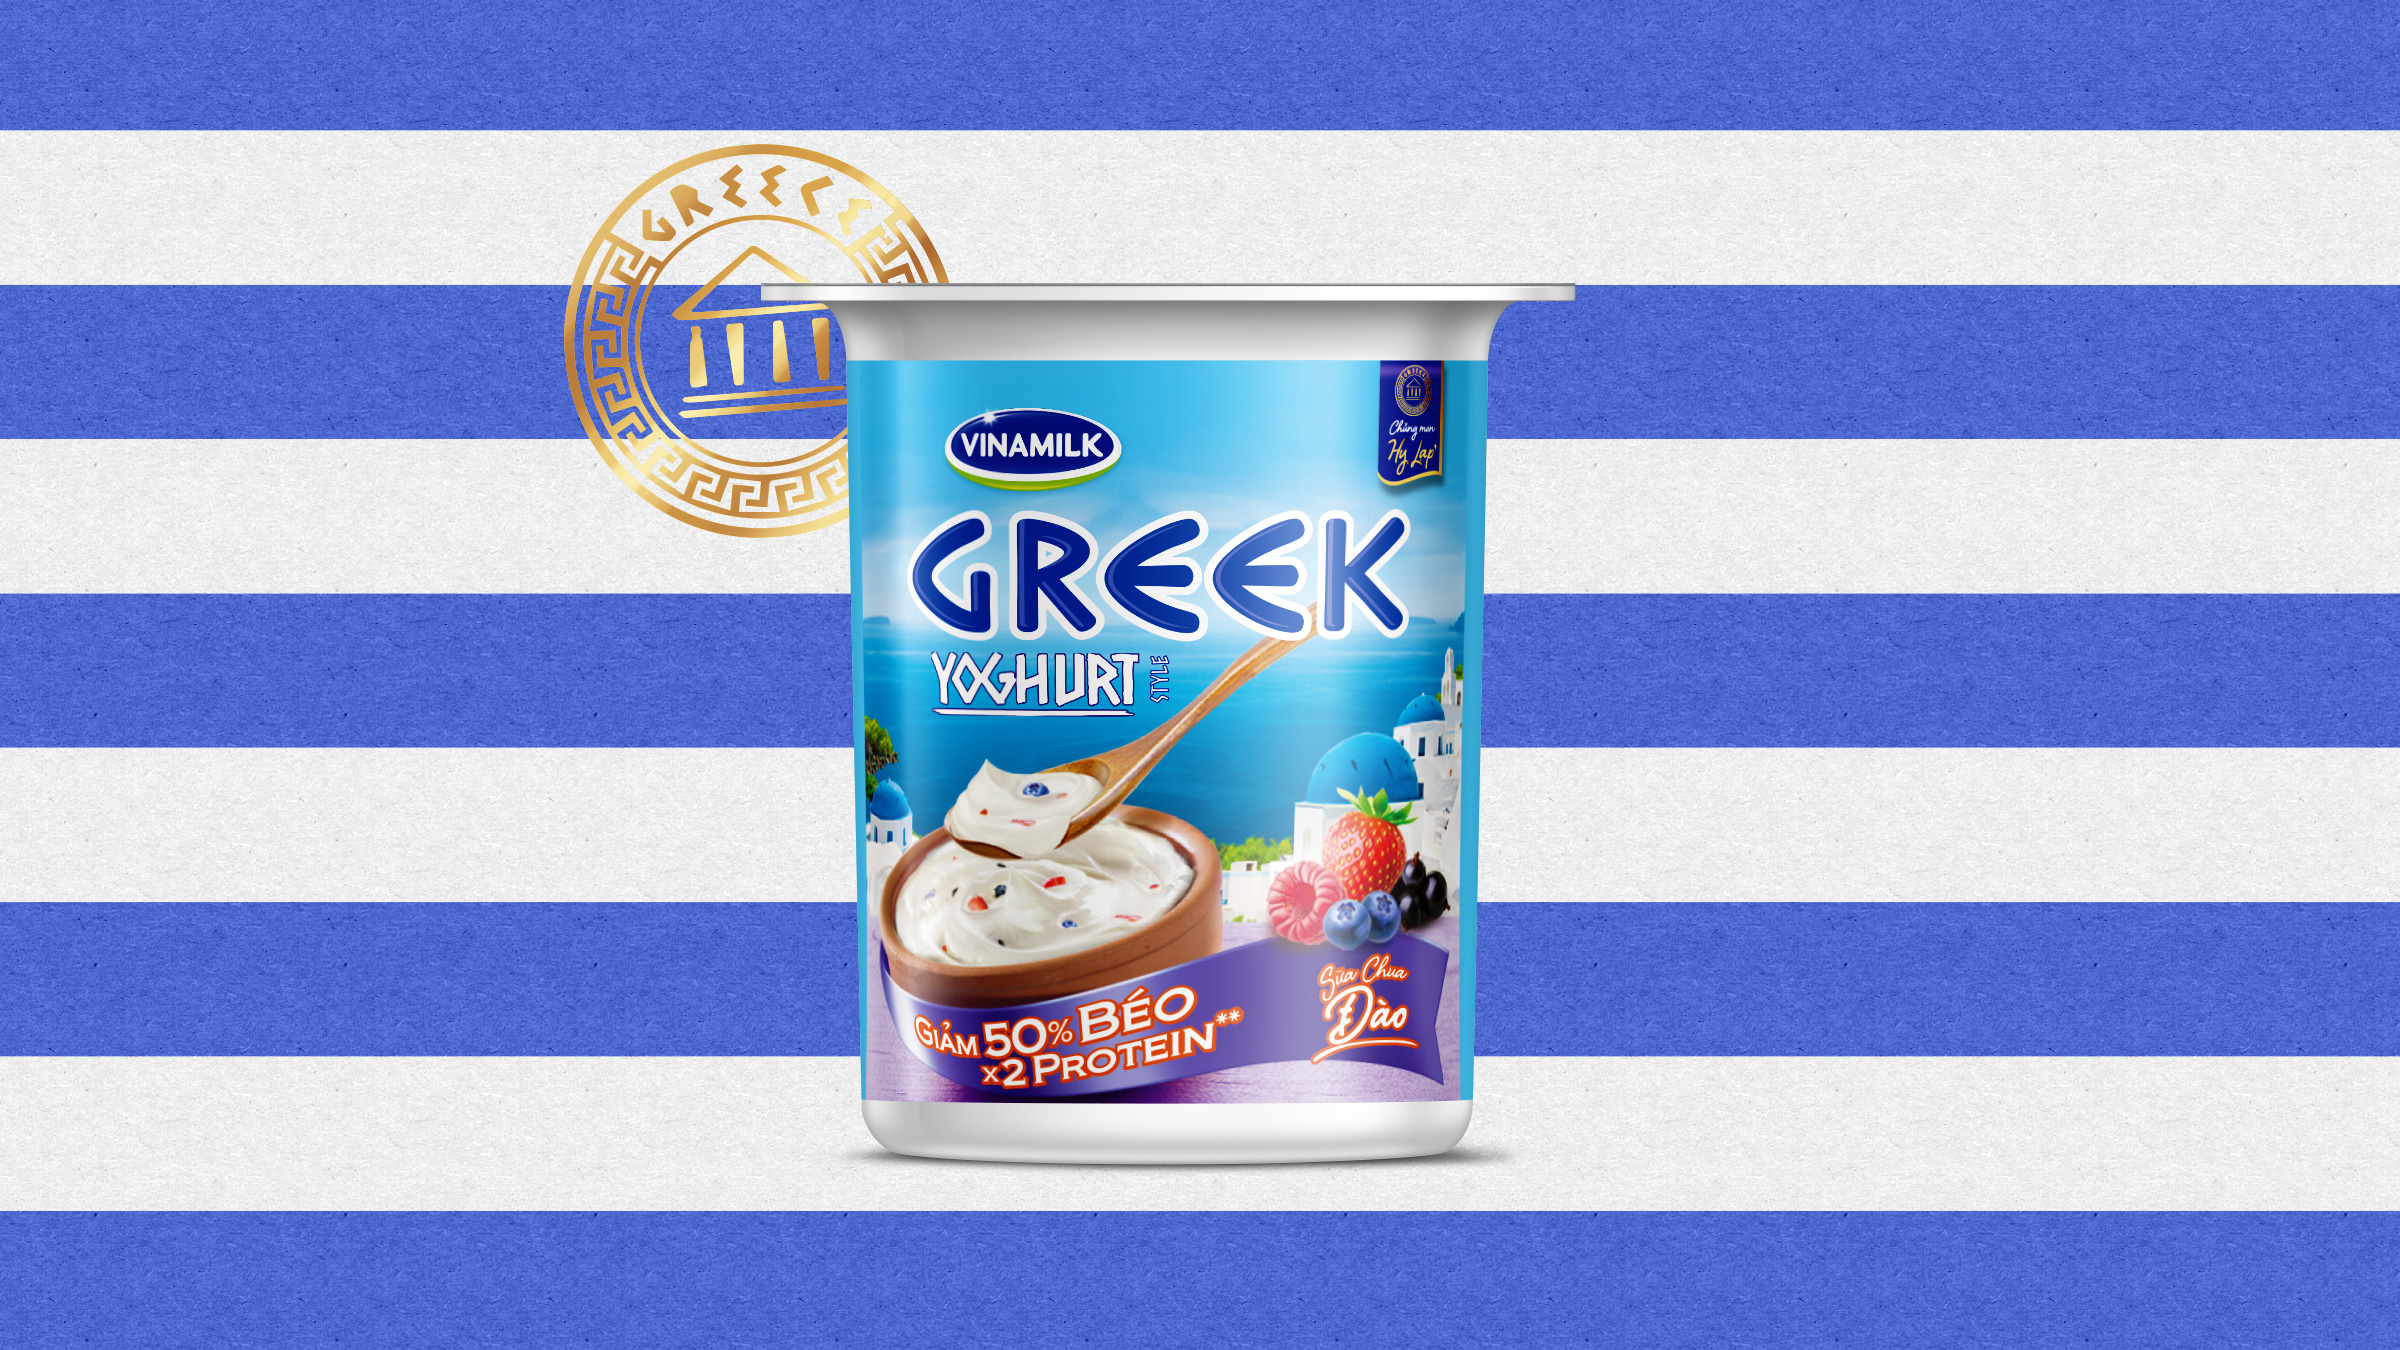 Vinamilk Greek yogurt packaging design